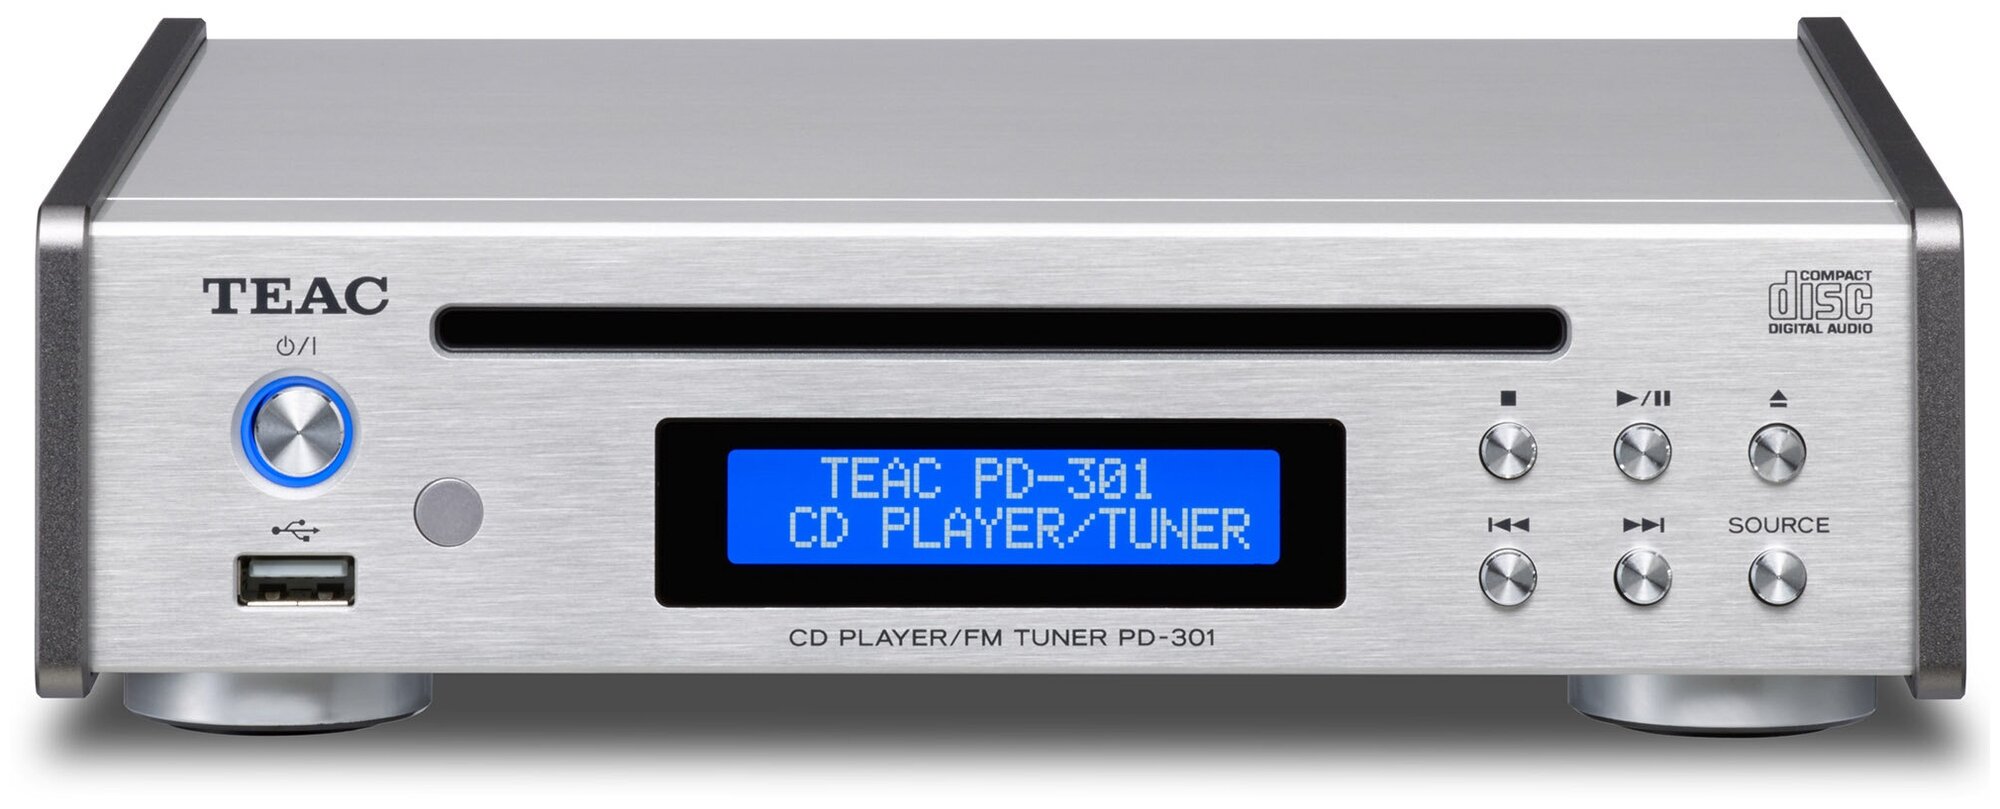 CD-ресивер TEAC PD-301 серебристый